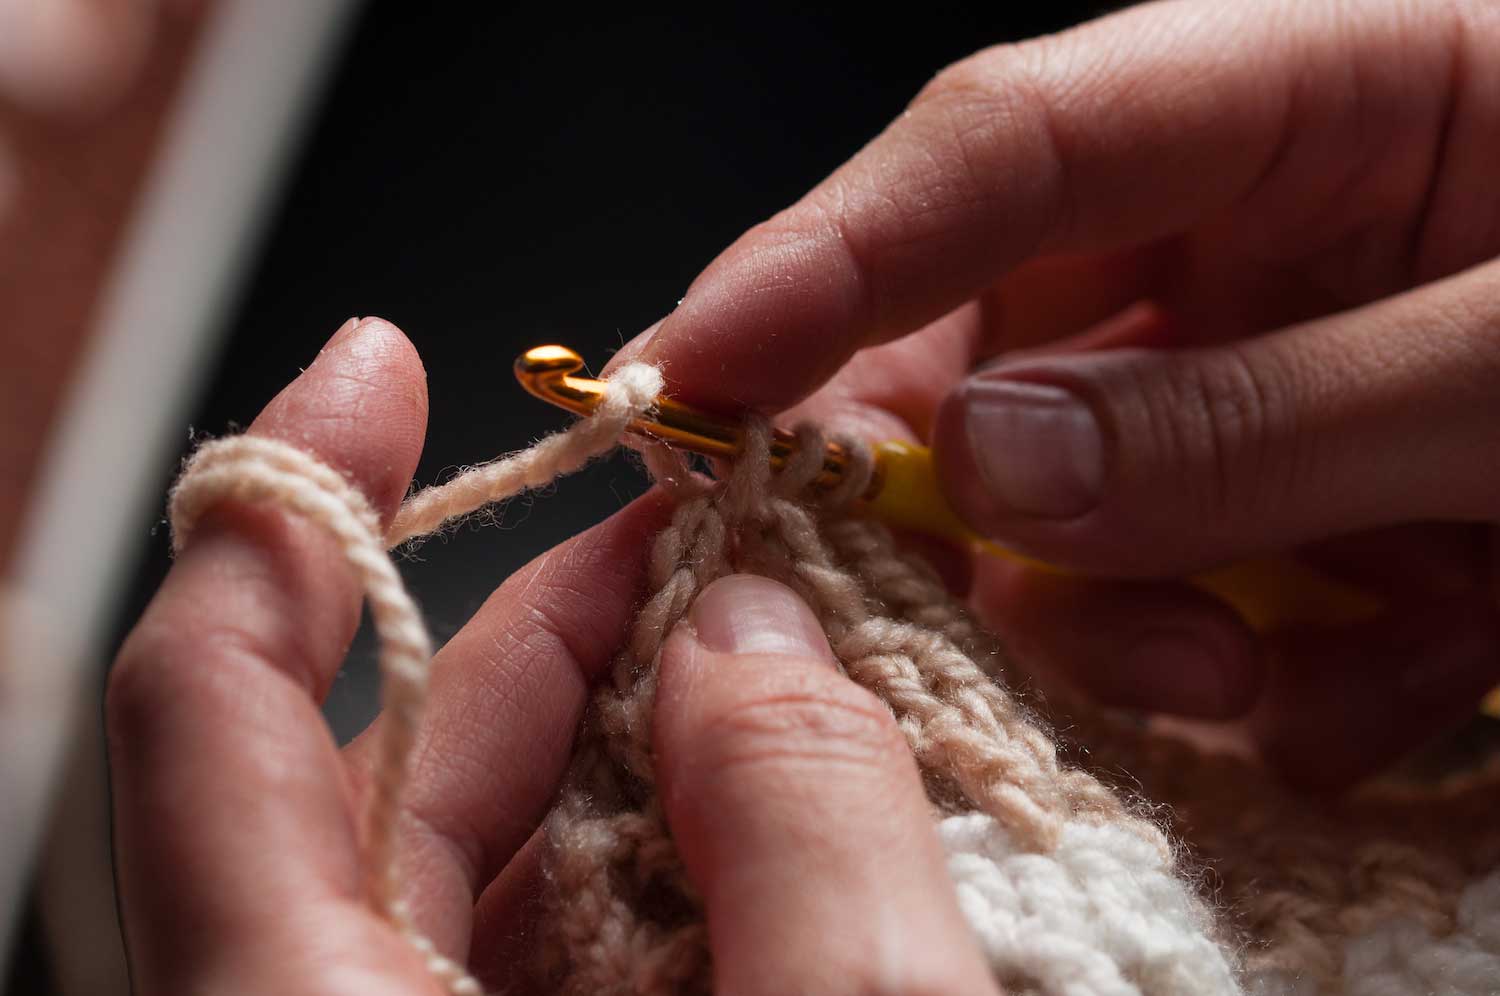 A closeup of hands crocheting.